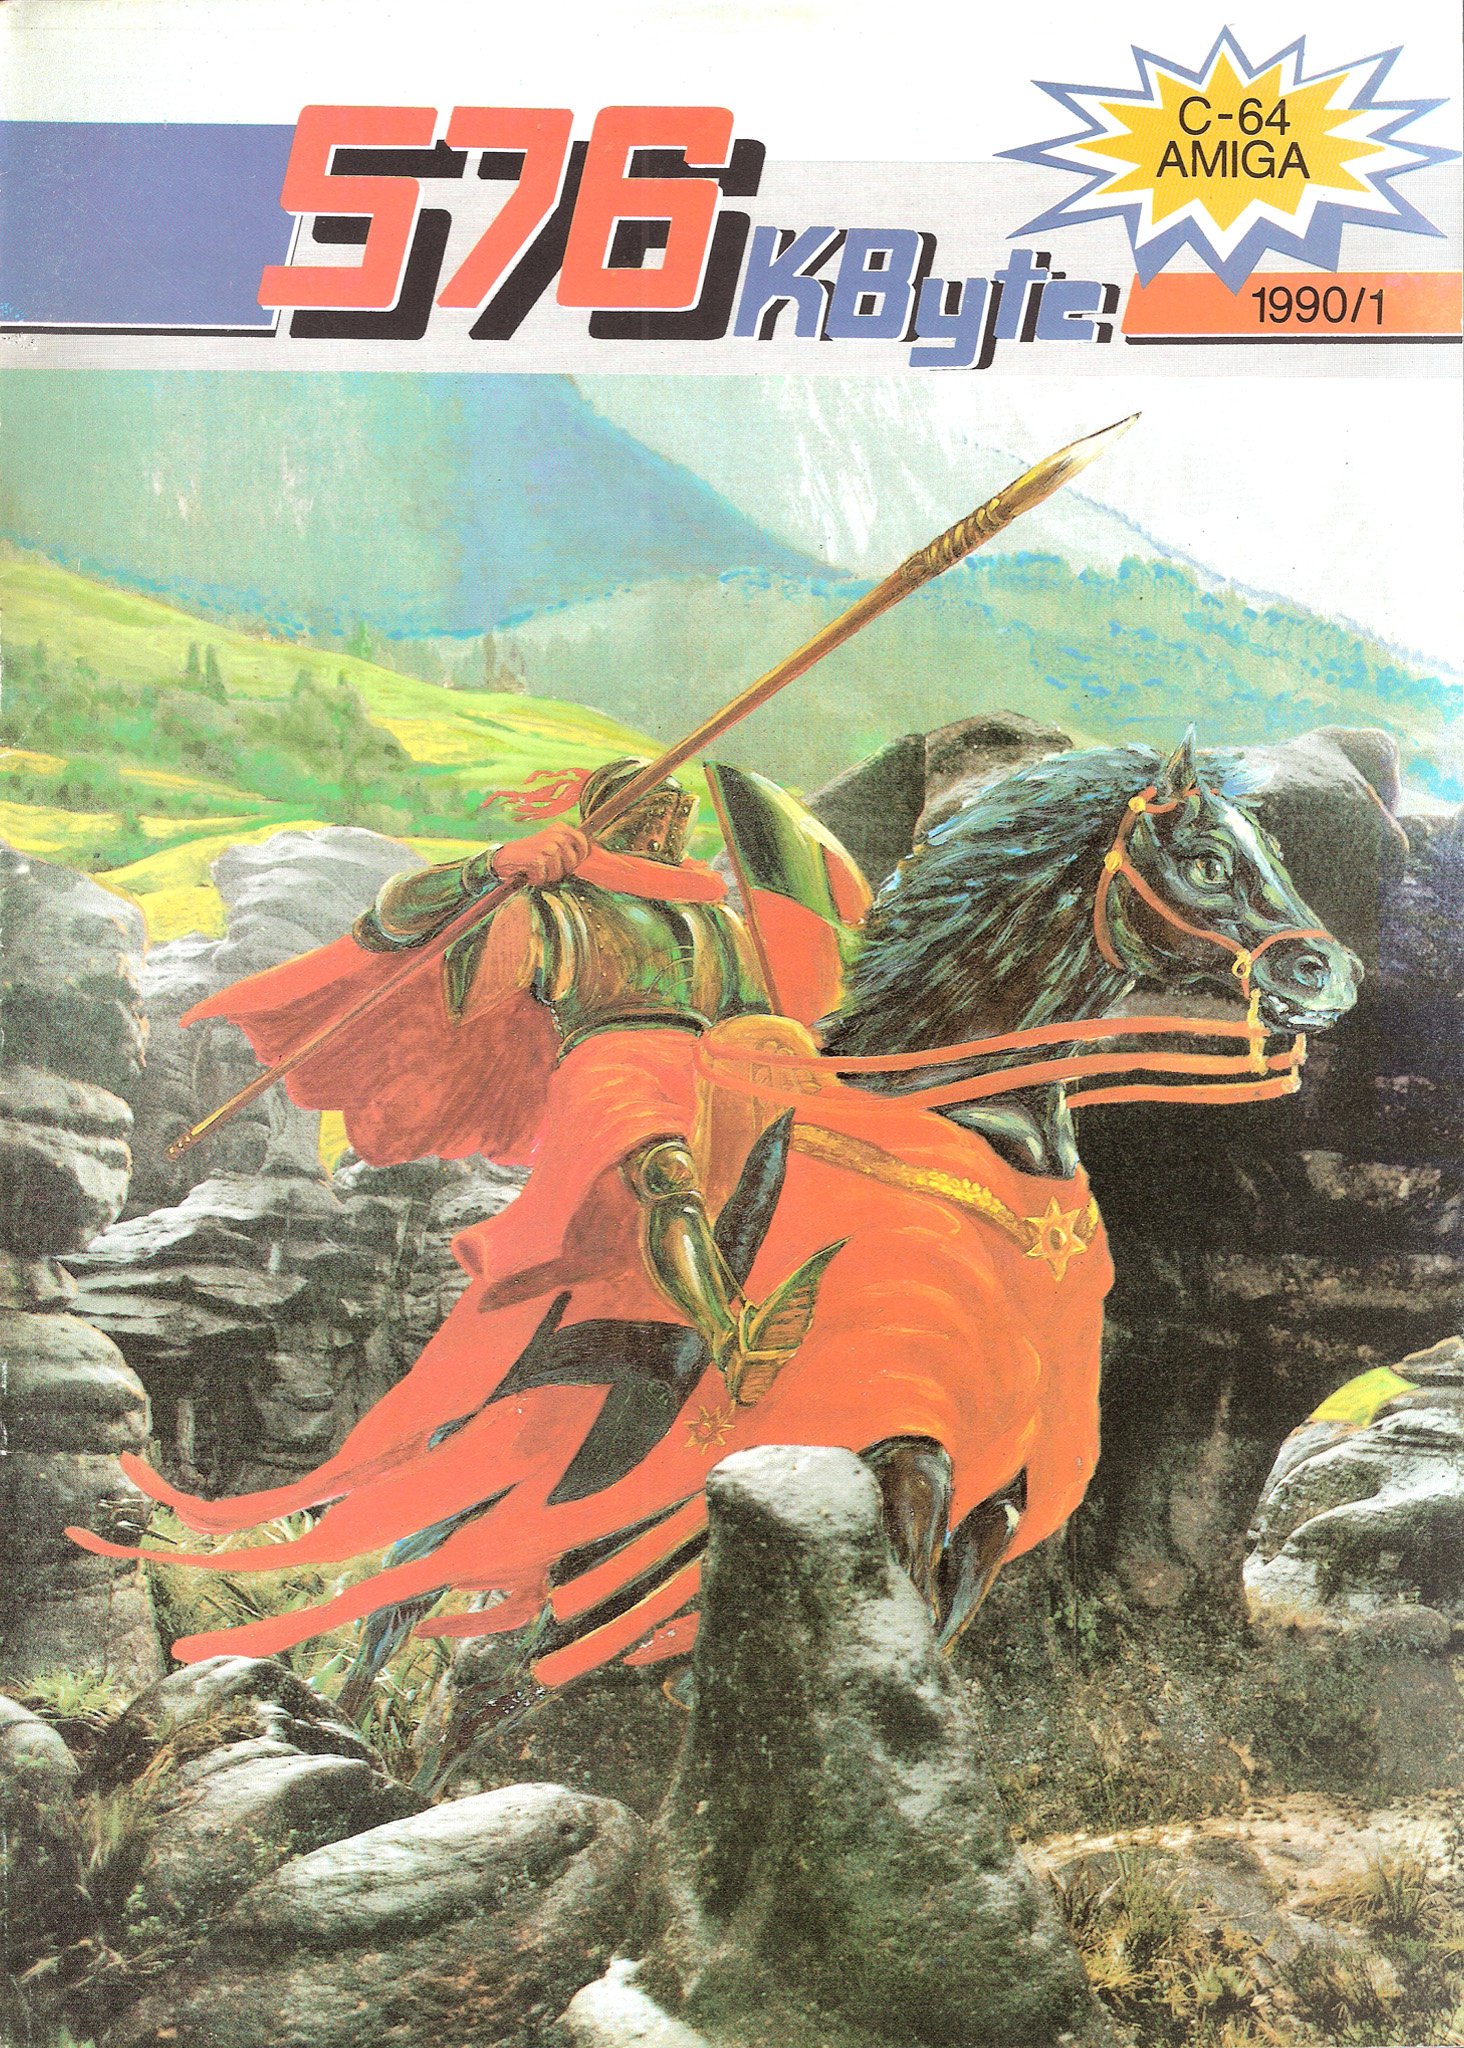 576 KByte Issue 001 (January 1990)